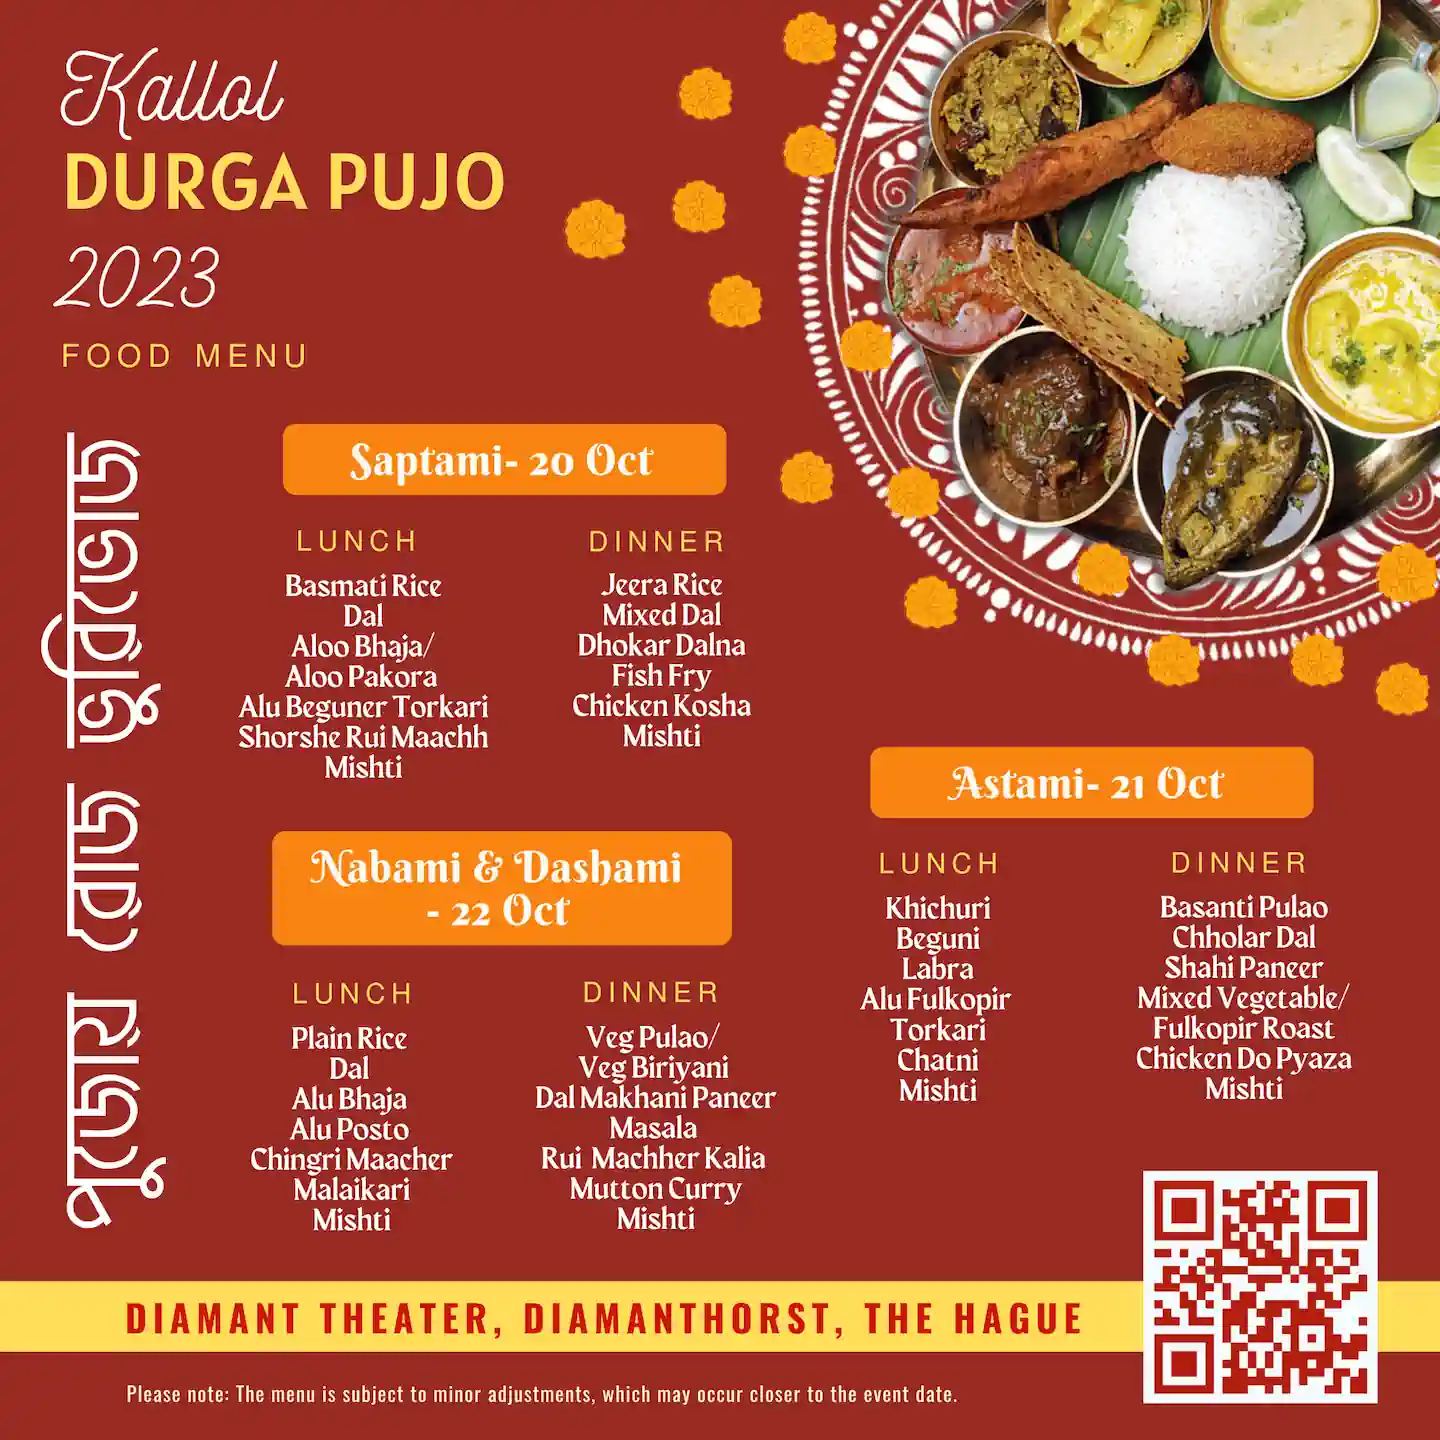 Kallol Durga Pujo 2023 Food Menu